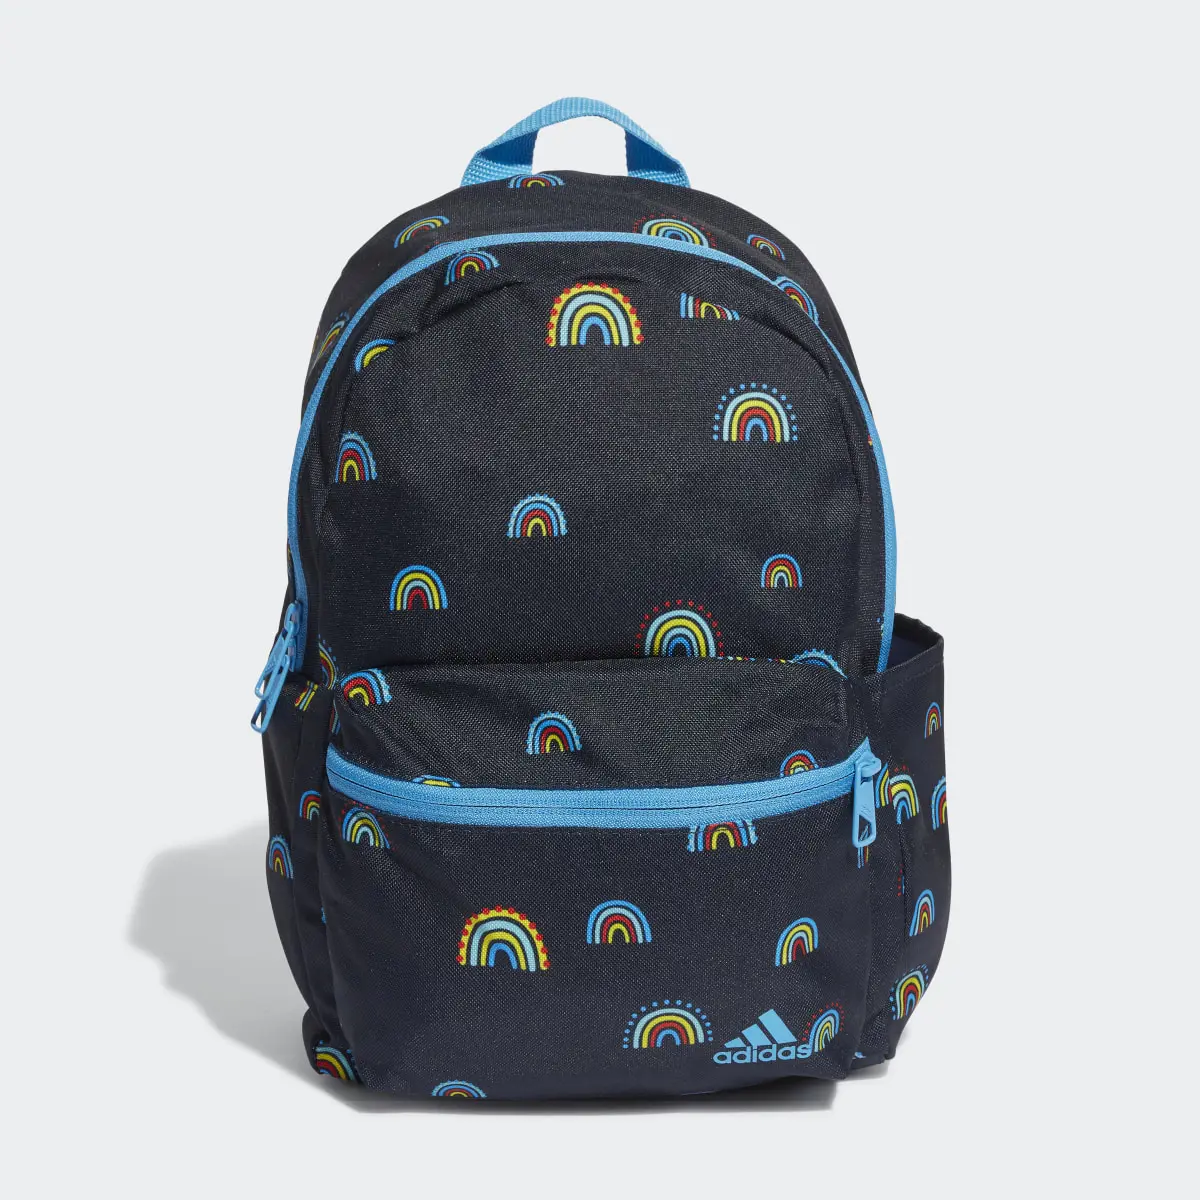 Adidas Rainbow Backpack. 2